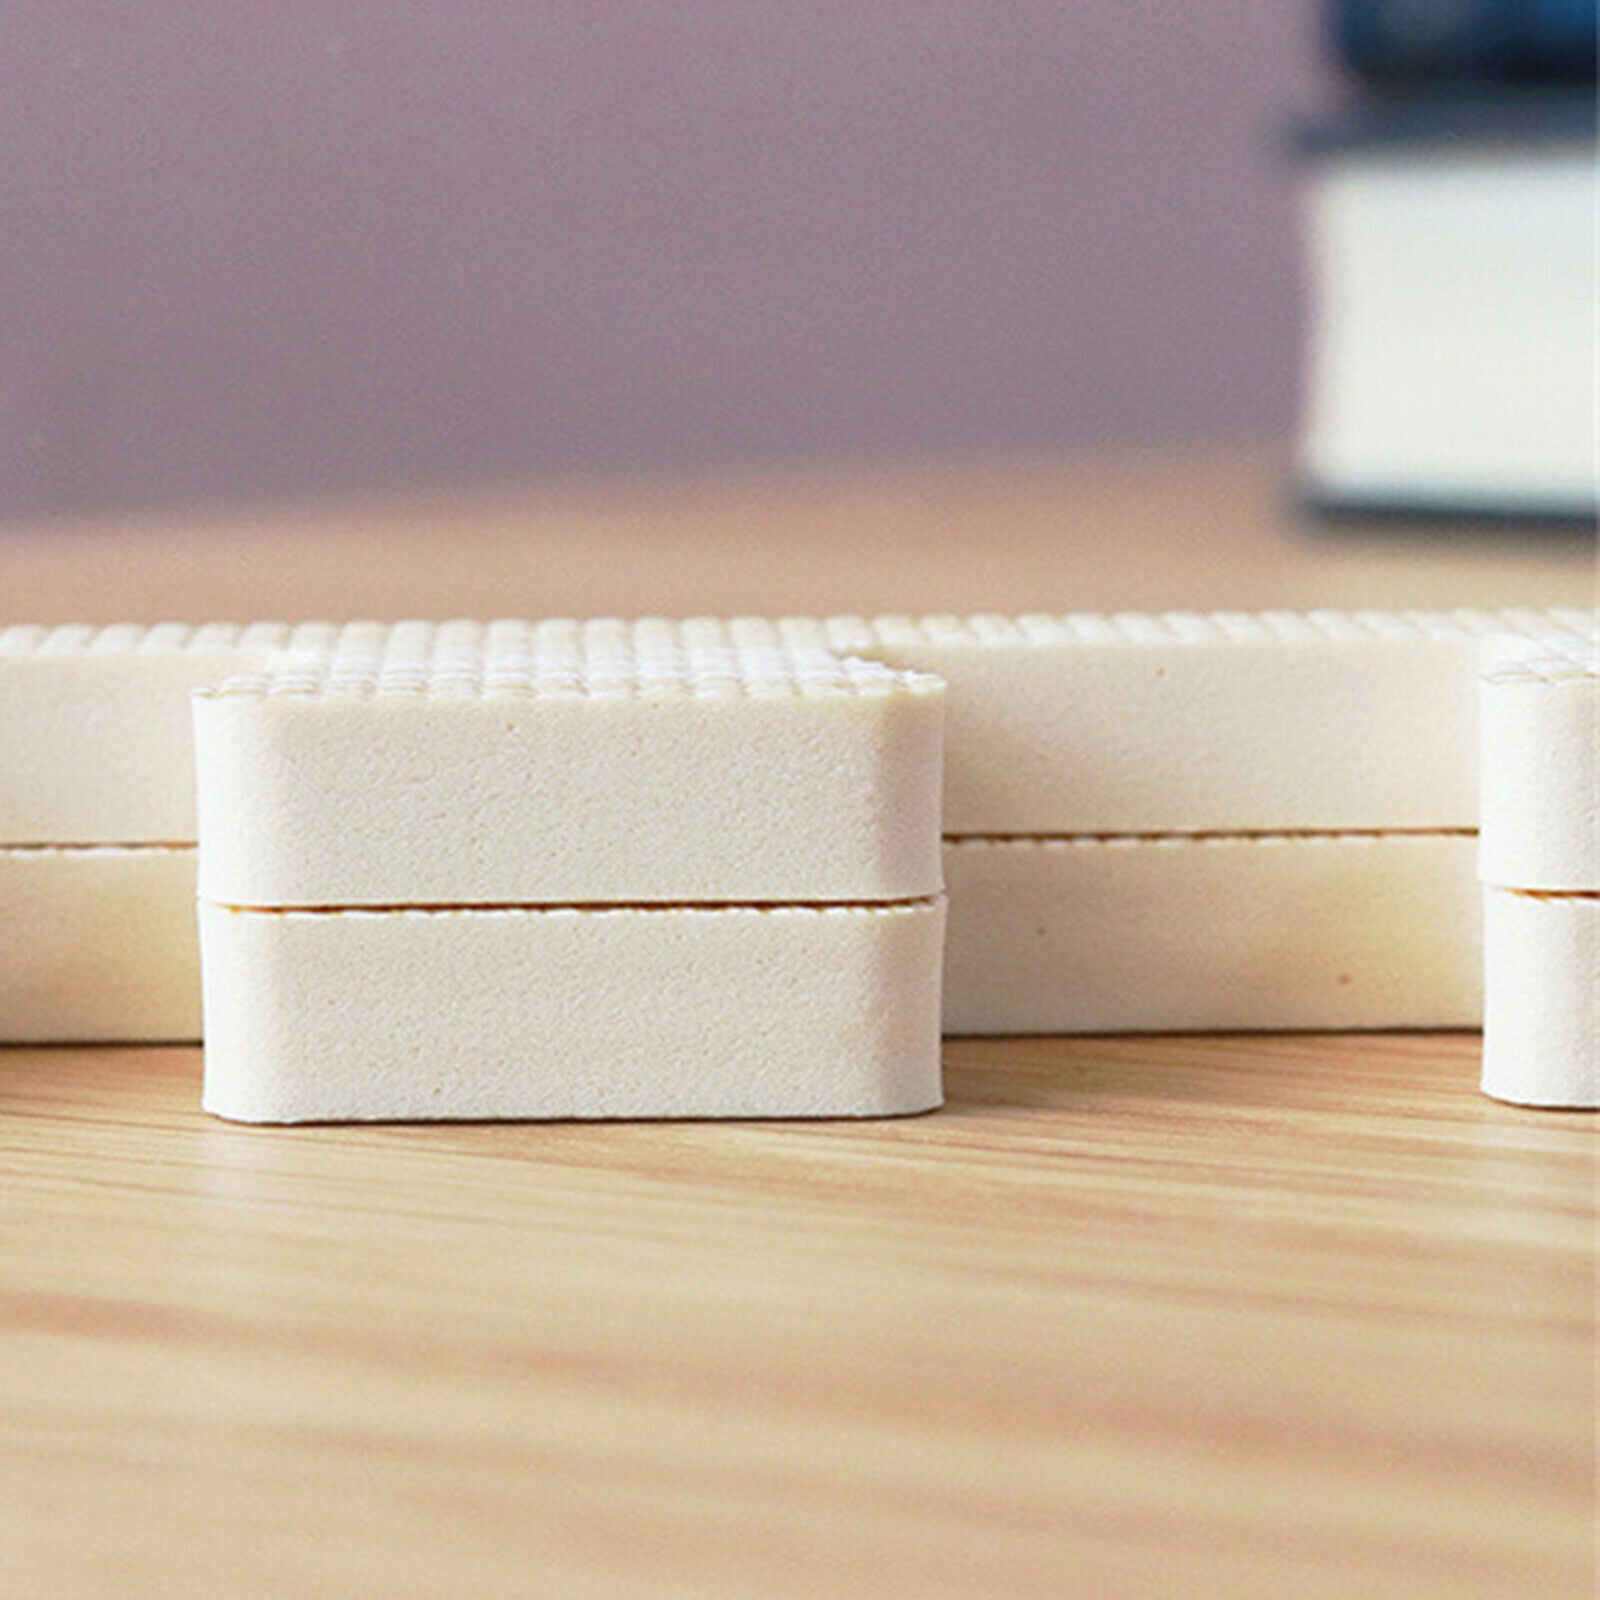 12x Soft EVA Foam Puzzle Mat Square Padding Tiles Play Mat for Yoga Camping